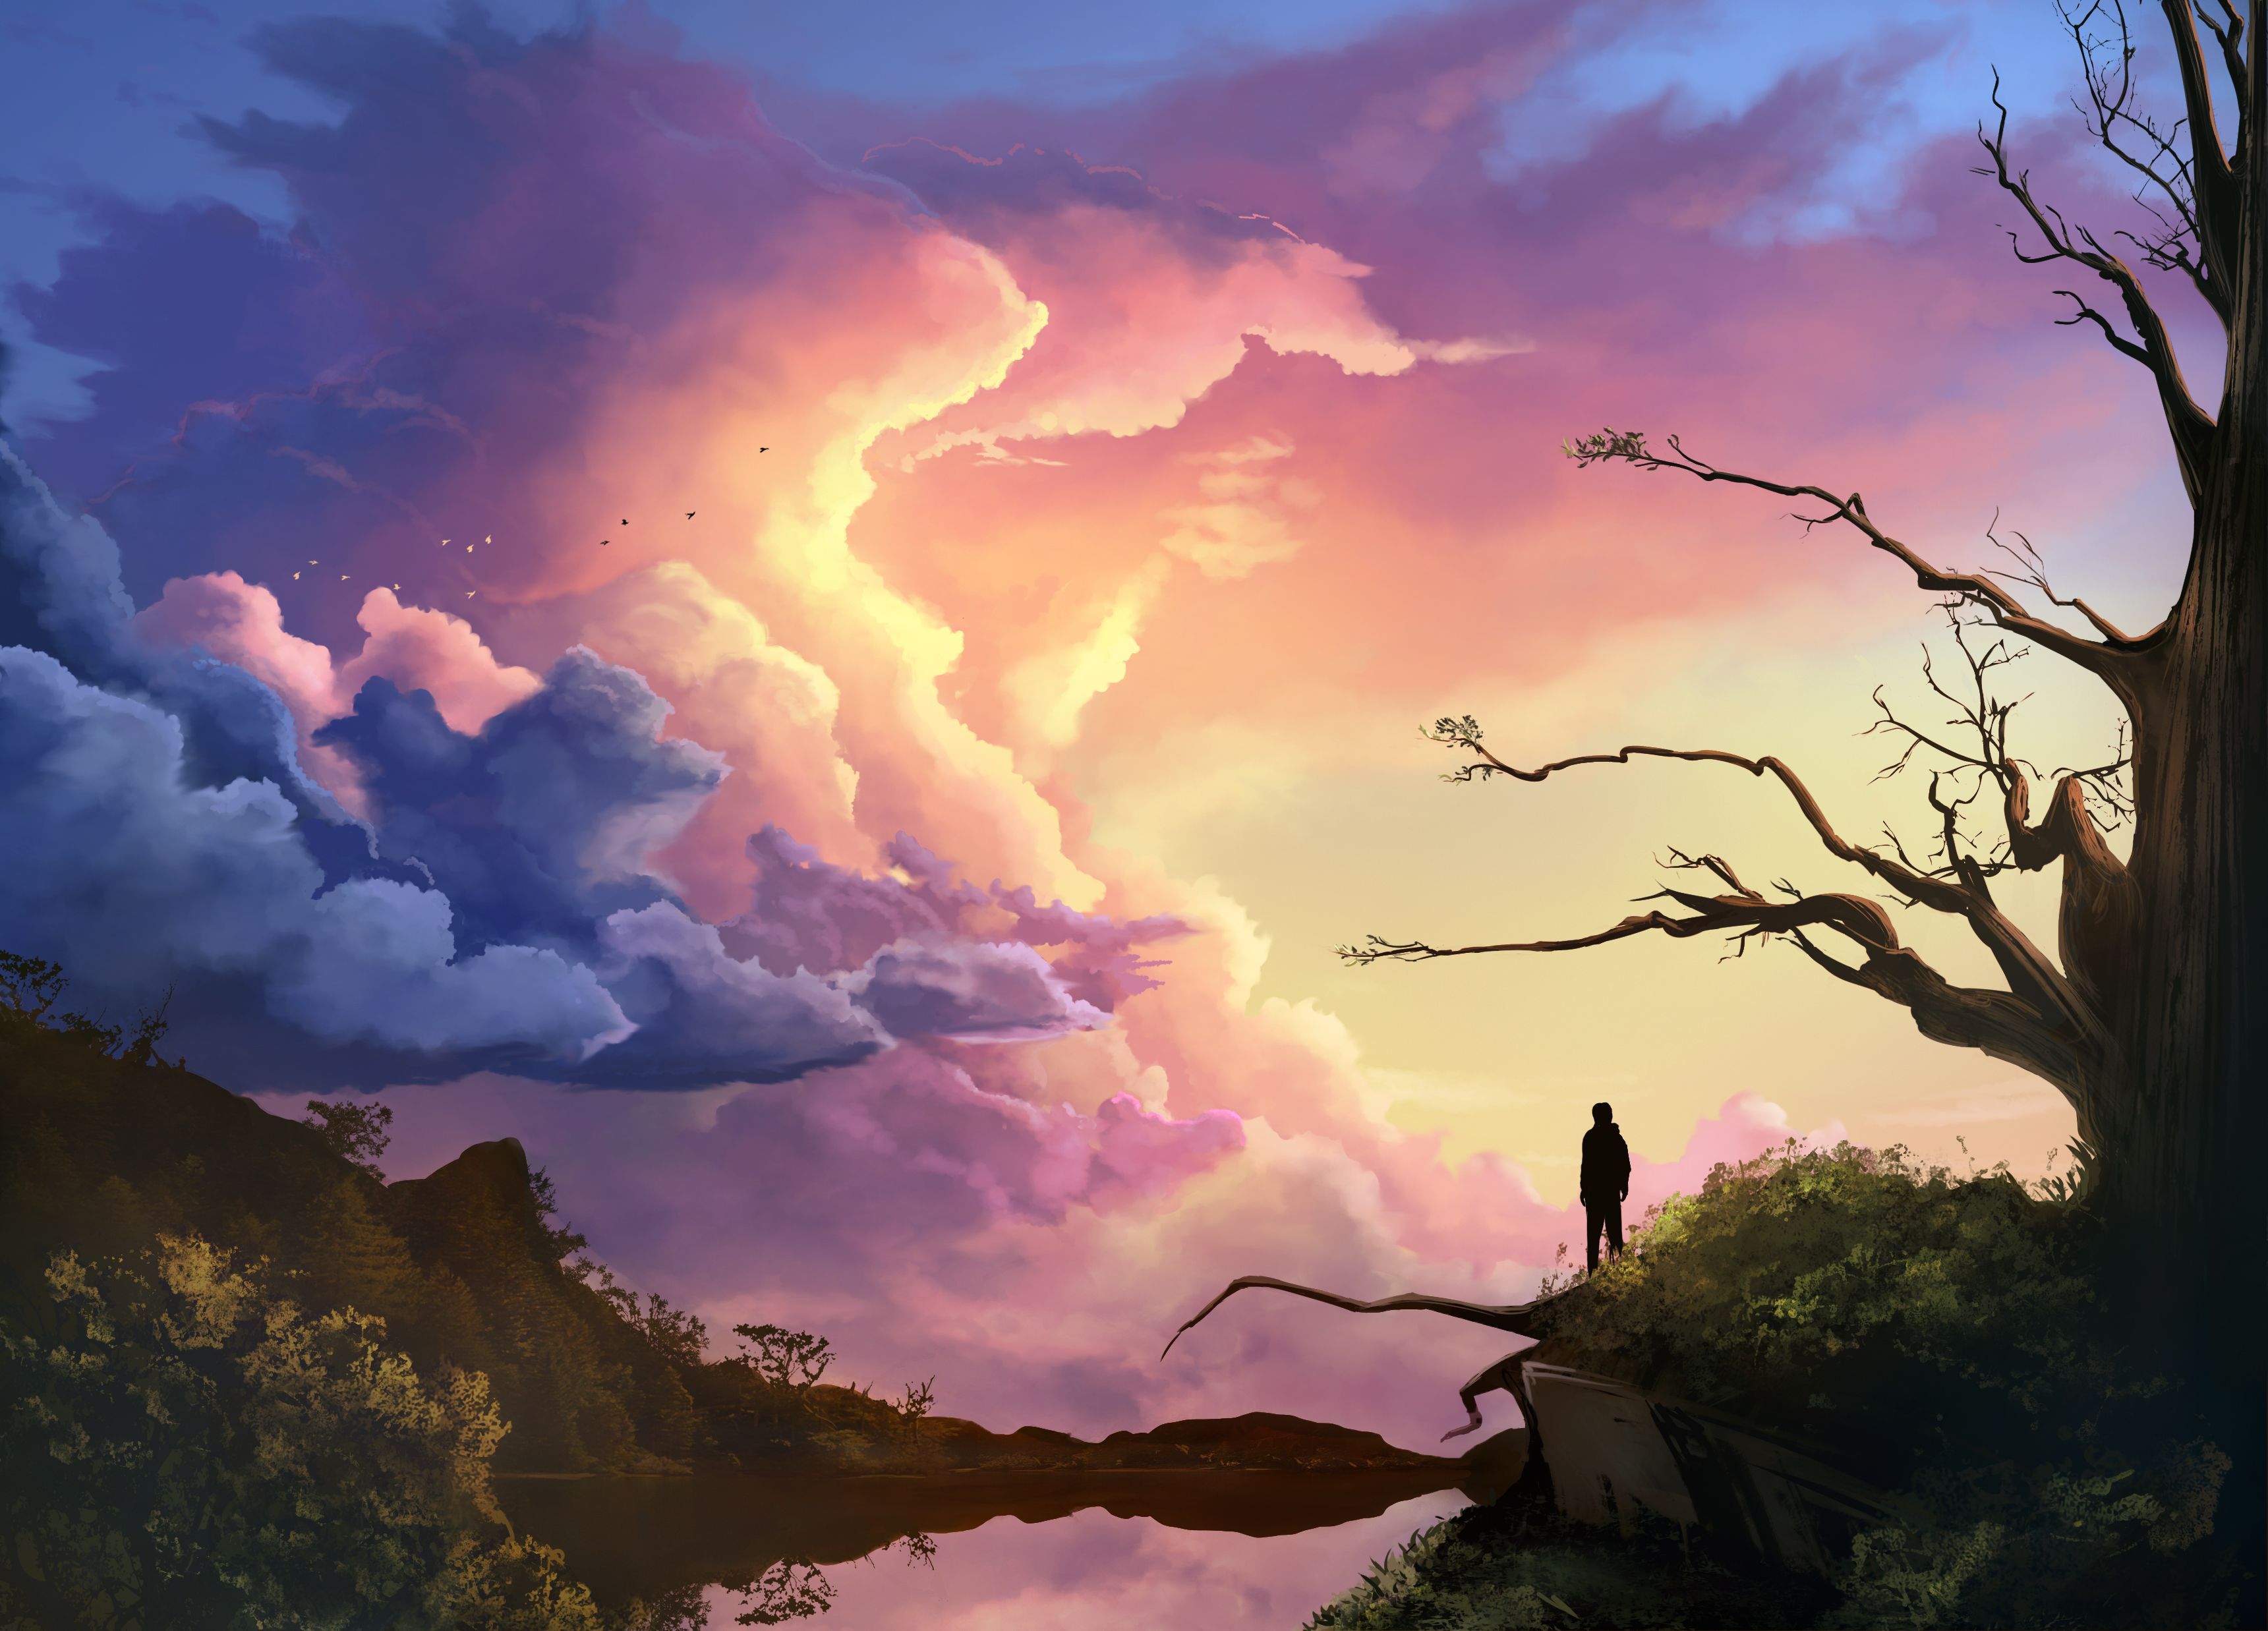 Digital Art Sunset Nature Sky Colorful Sunrise Clouds Wallpaper:3441x2475